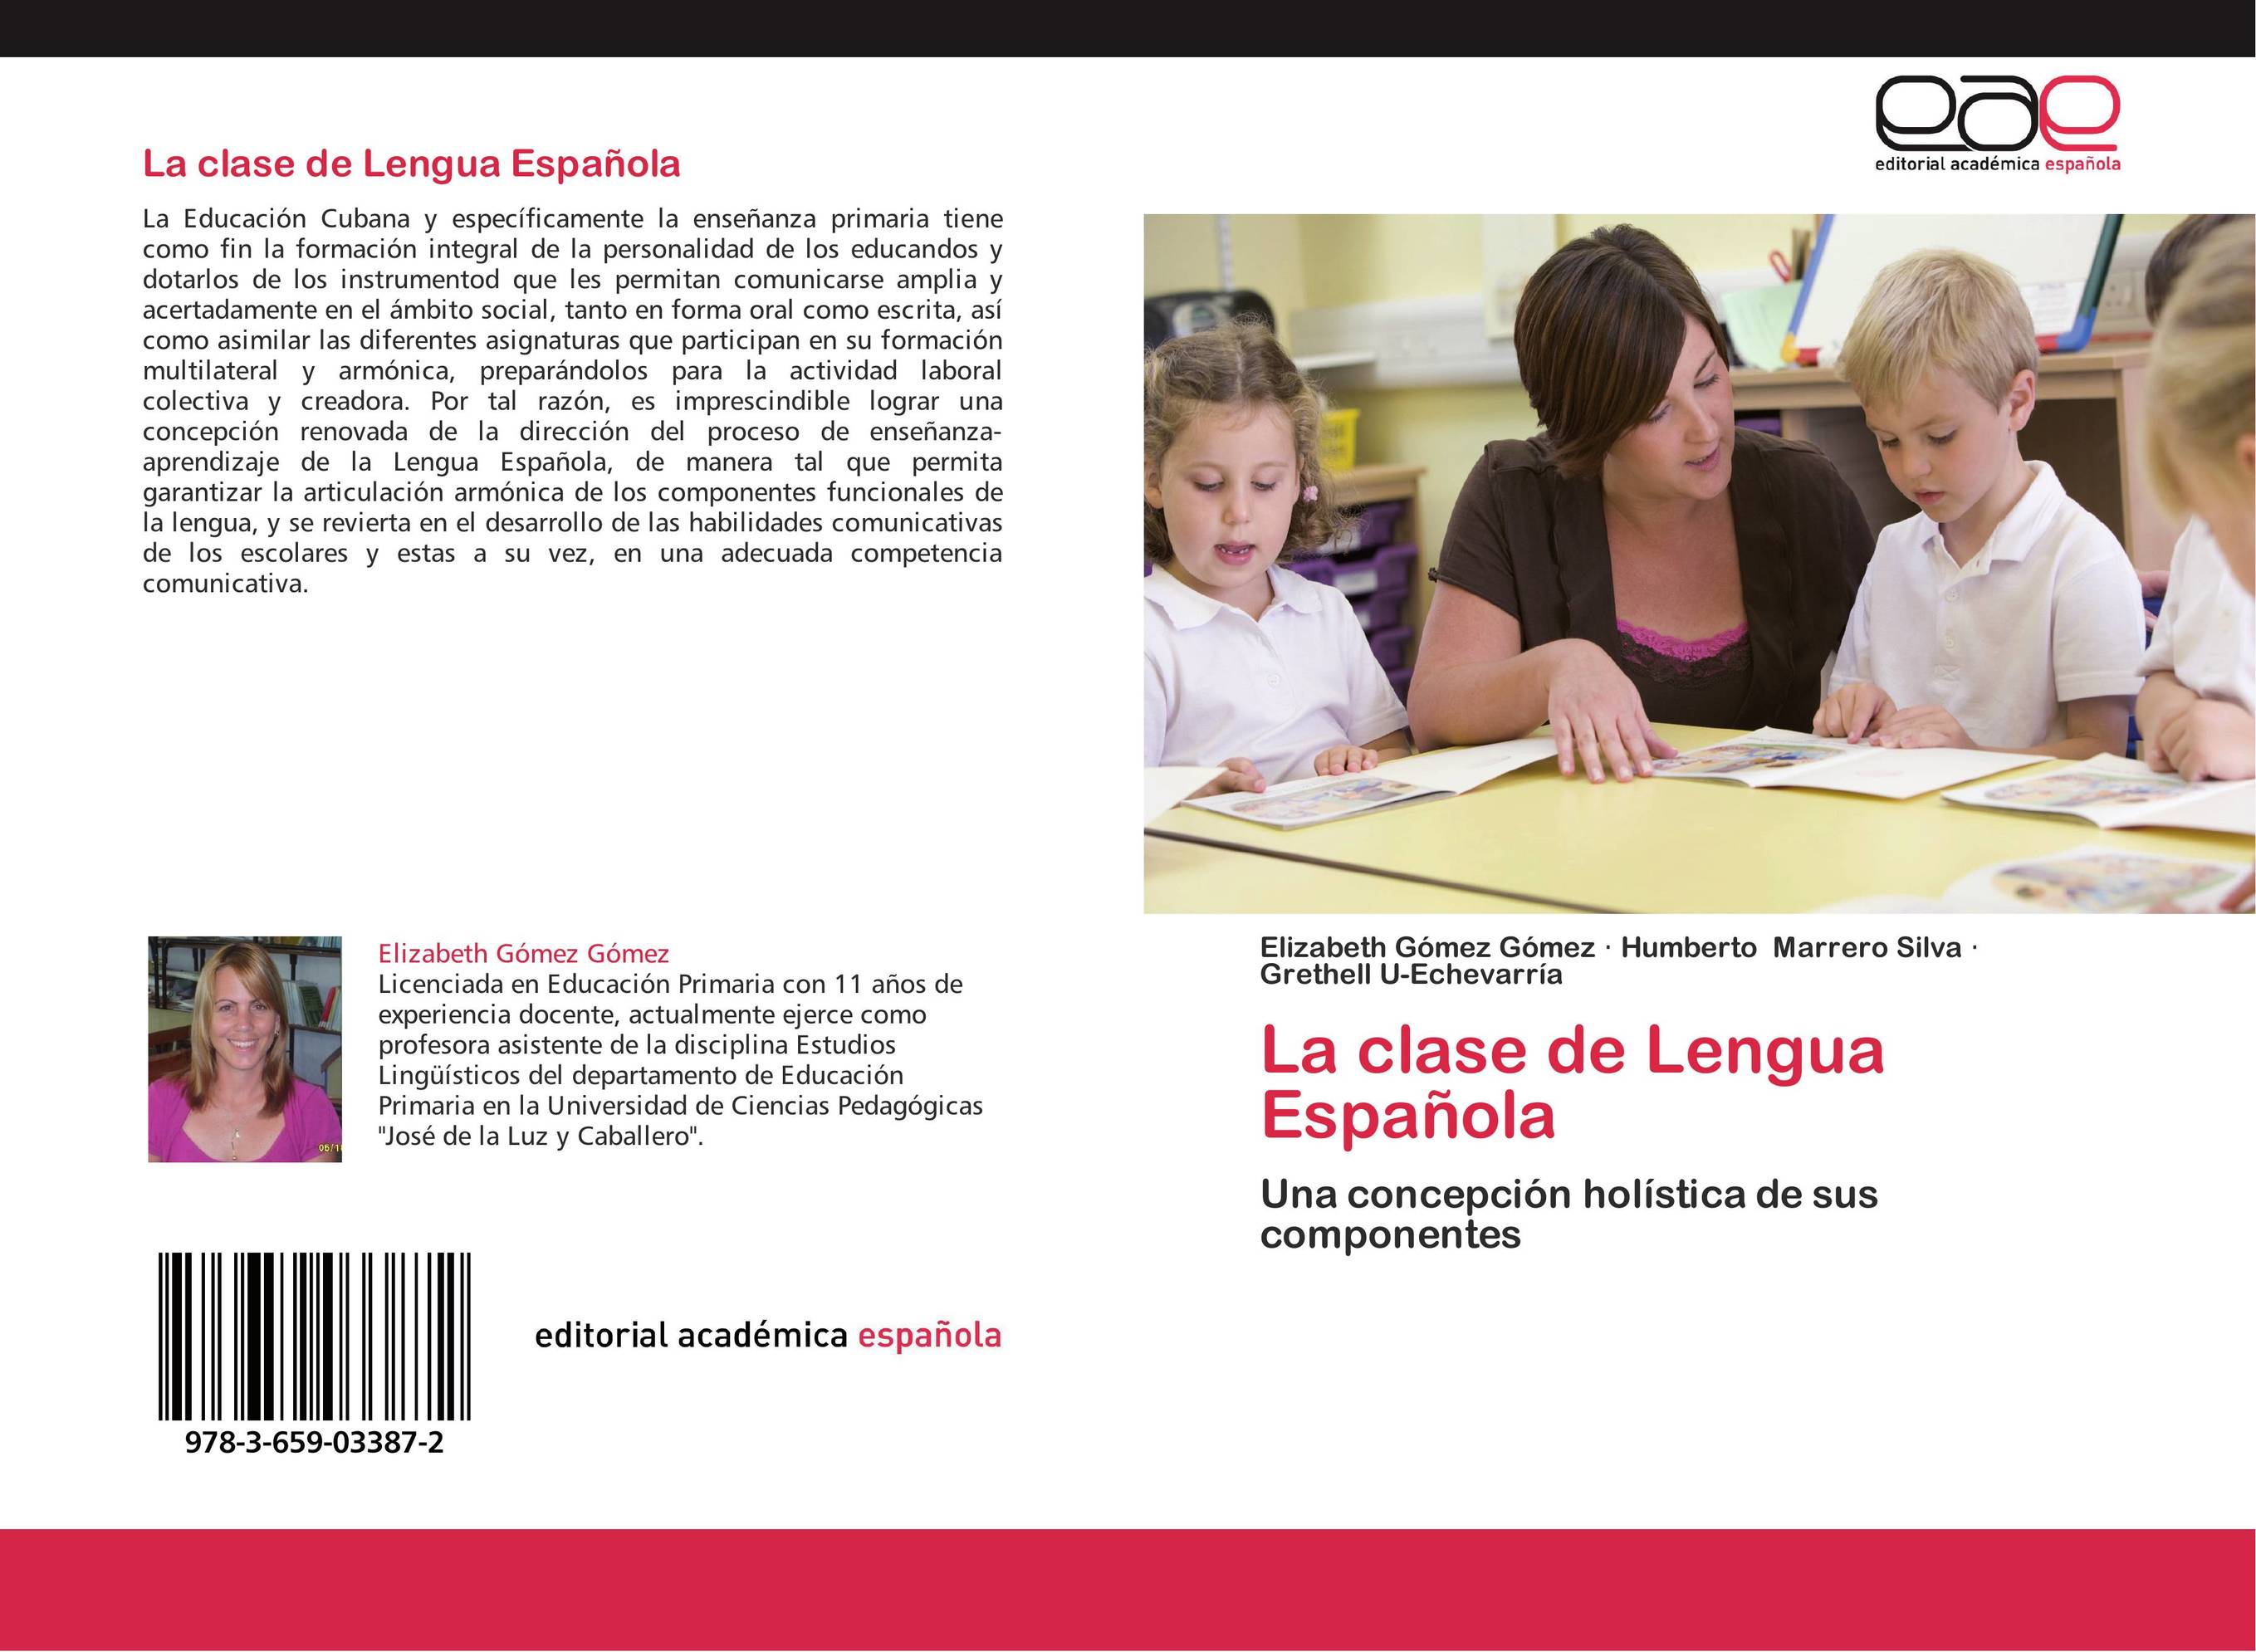 La clase de Lengua Española